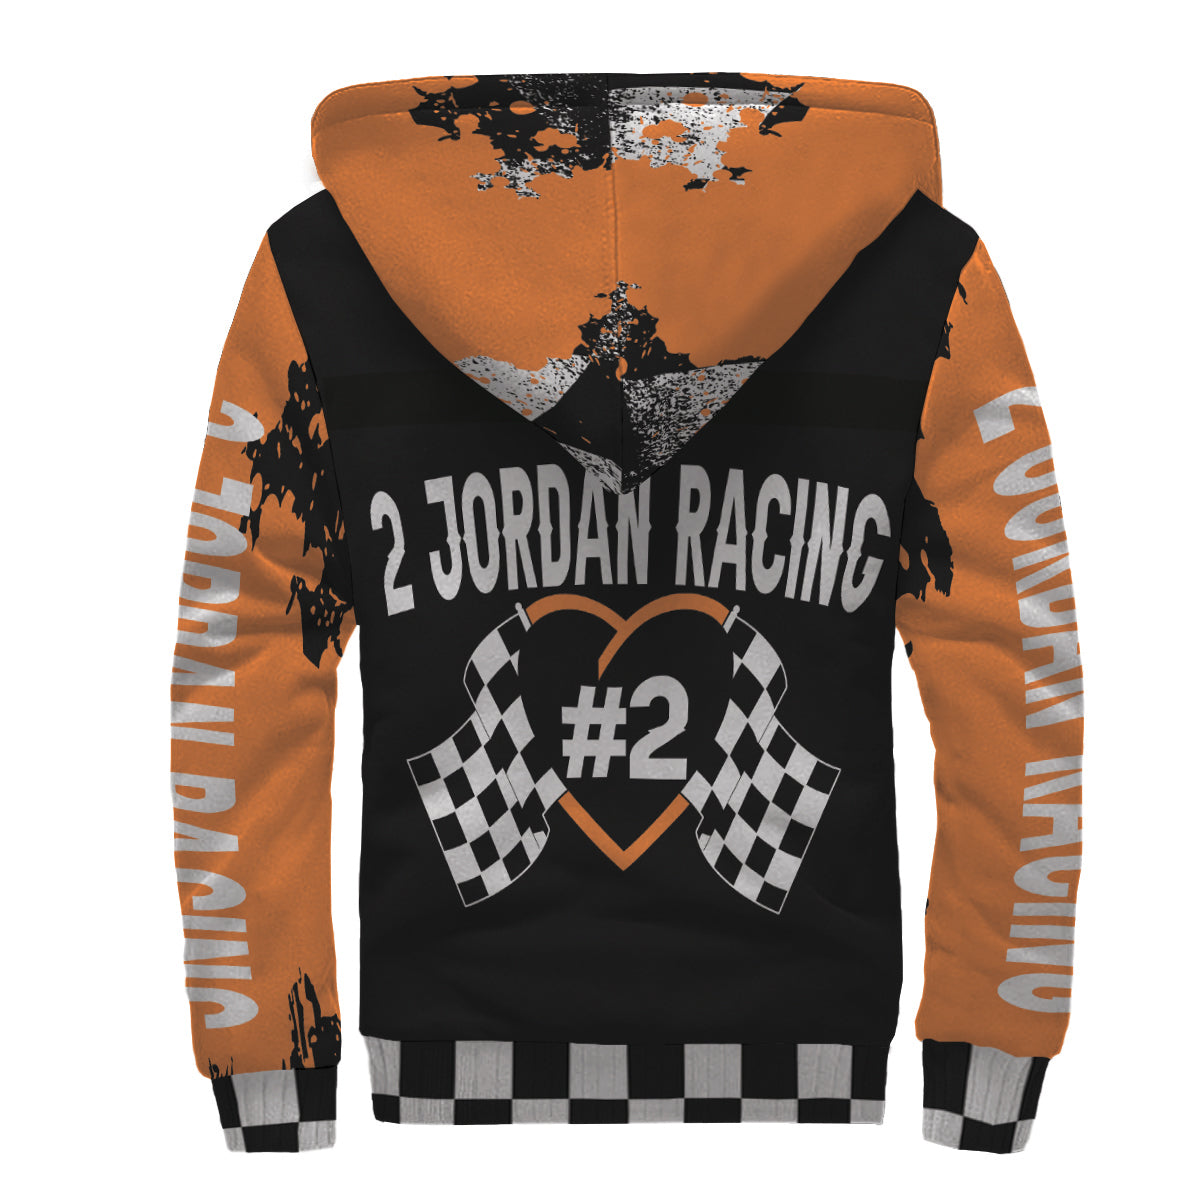 Jordan Racing Sherpa Jacket